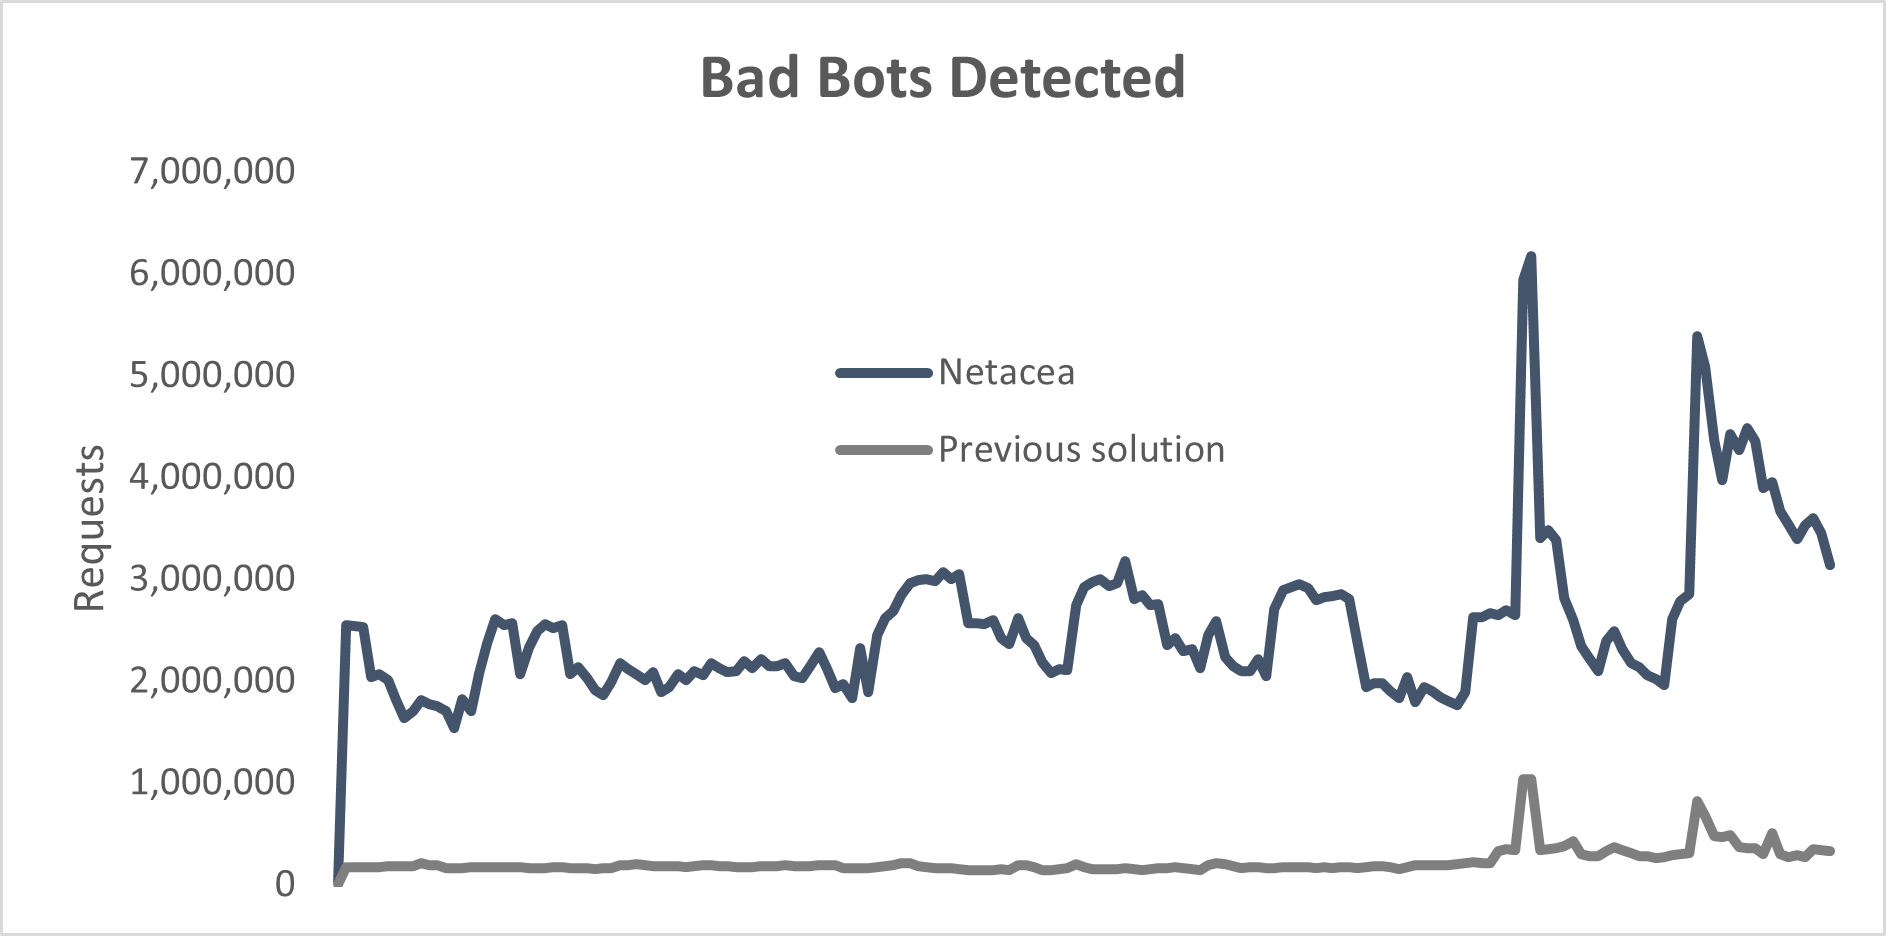 Netacea vs old bot management solution